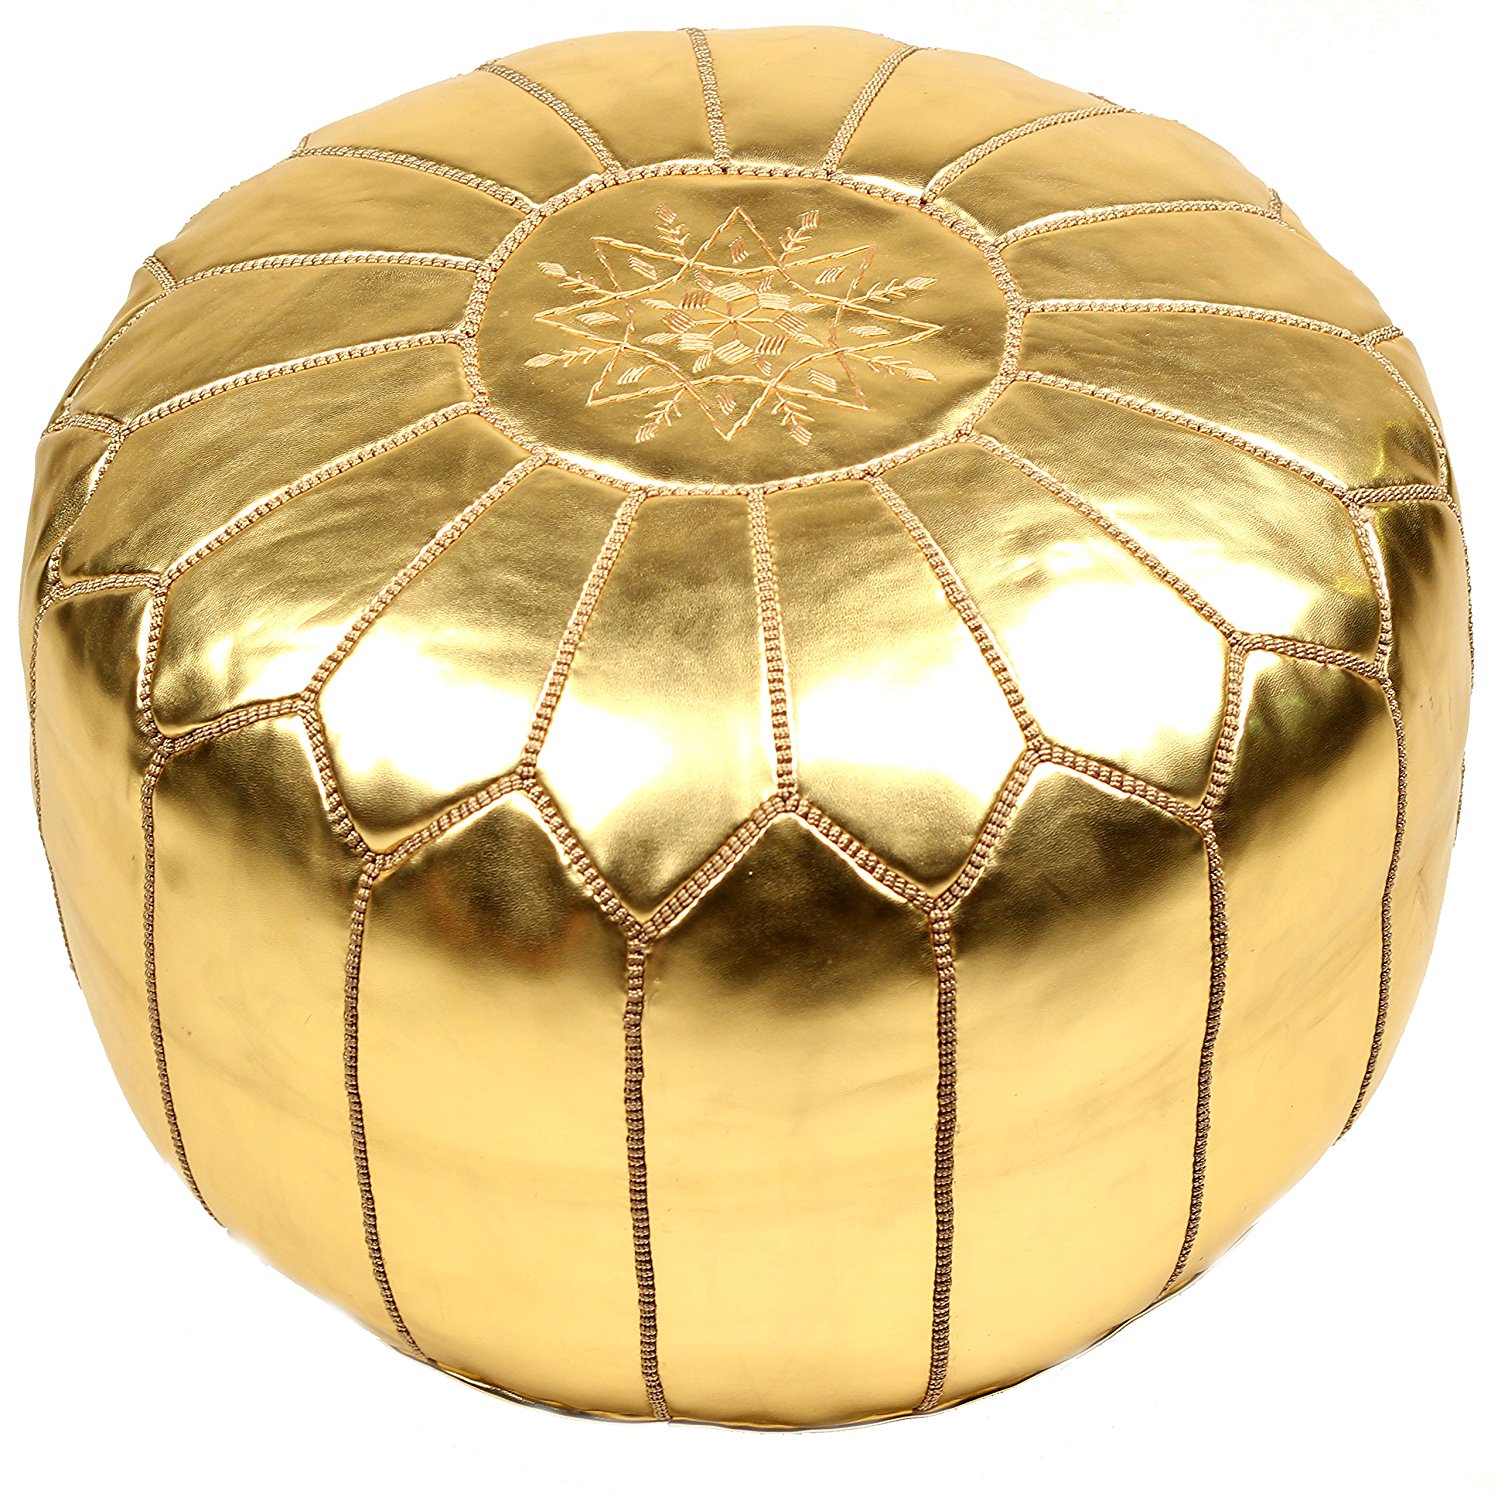 Luxury golden pouf